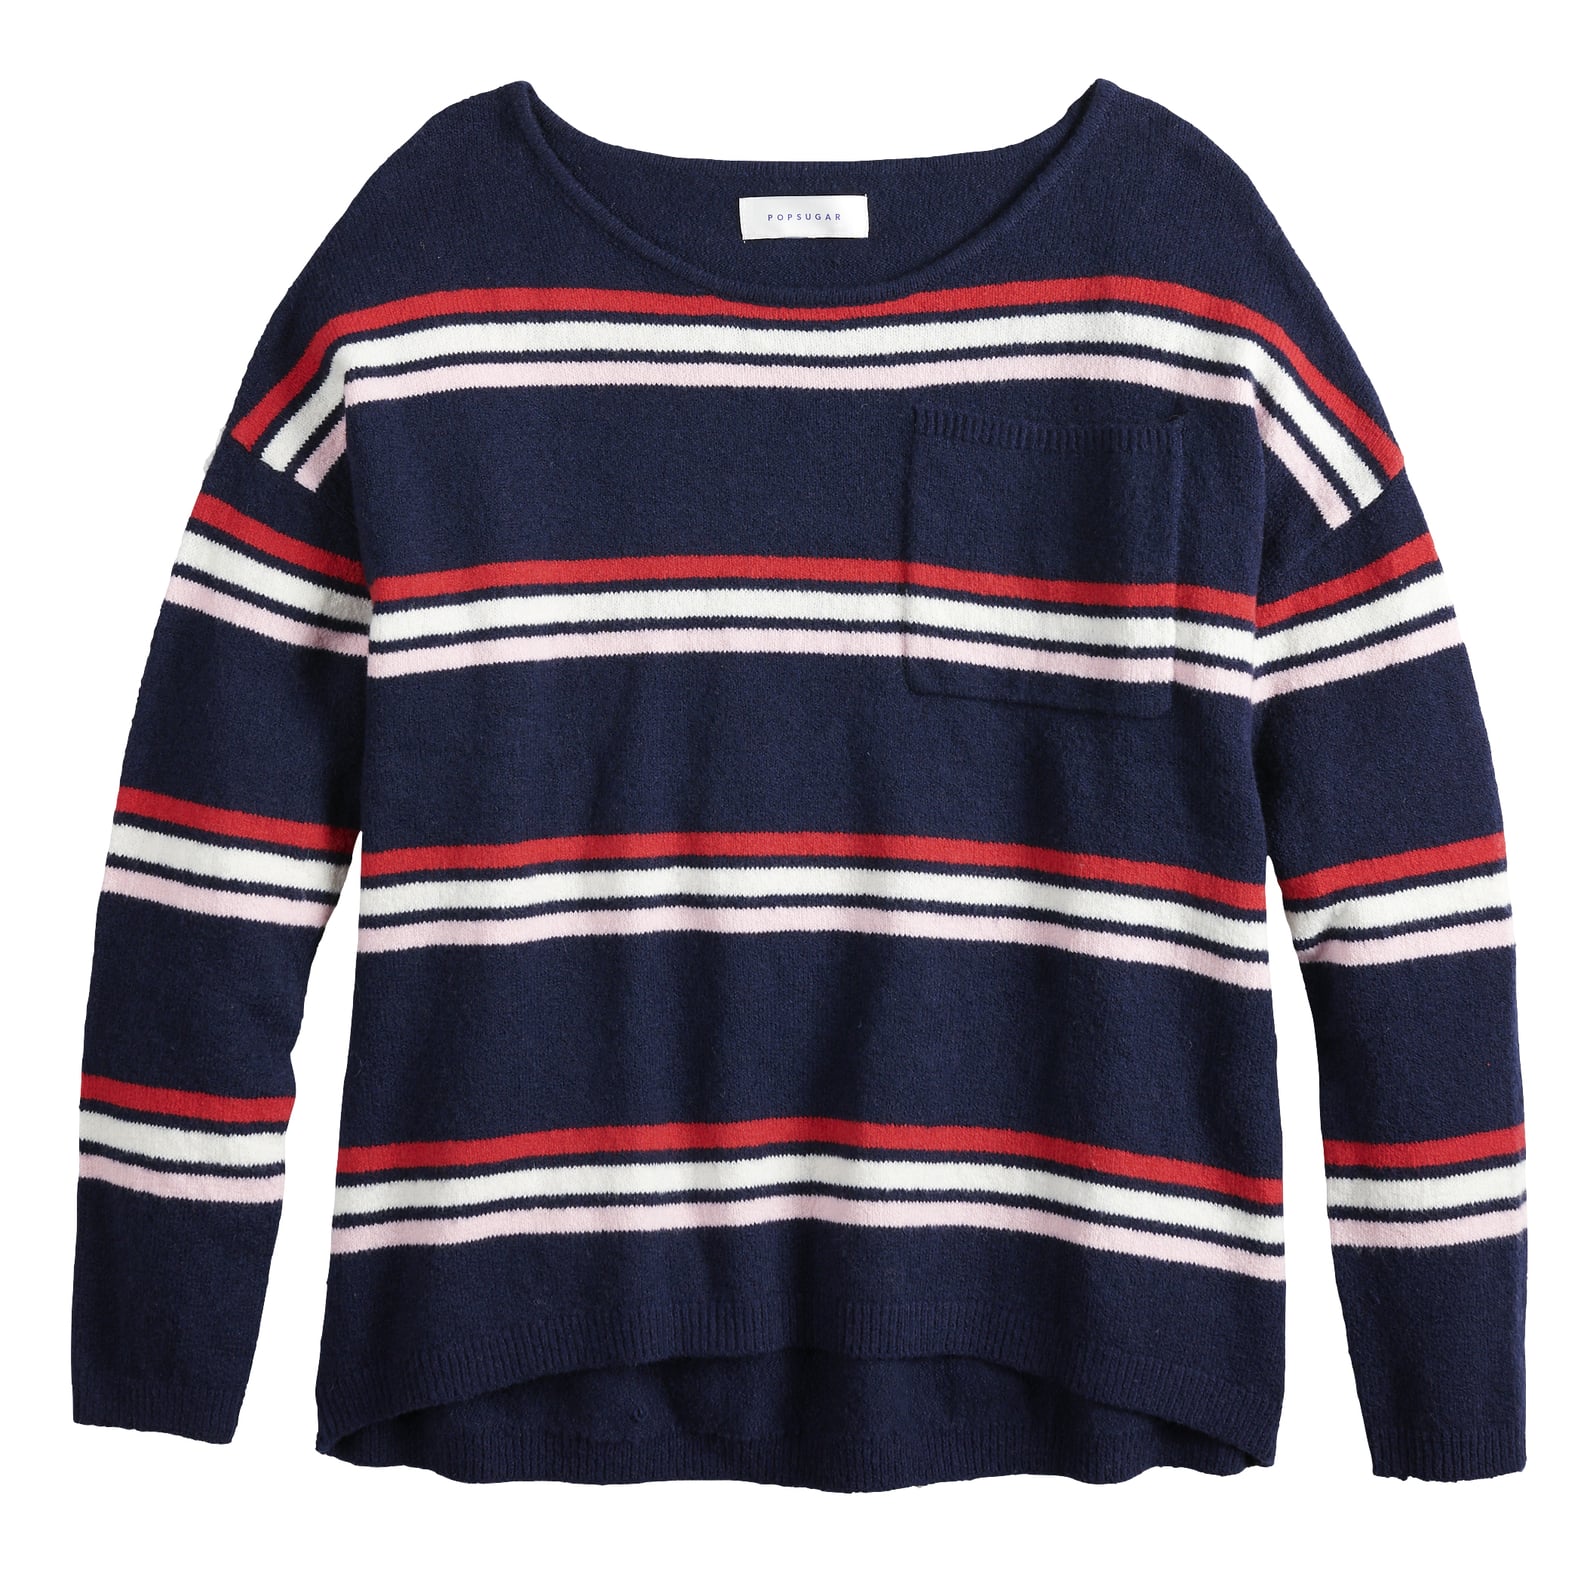 Cute Striped Shirt Outfits | POPSUGAR Fashion